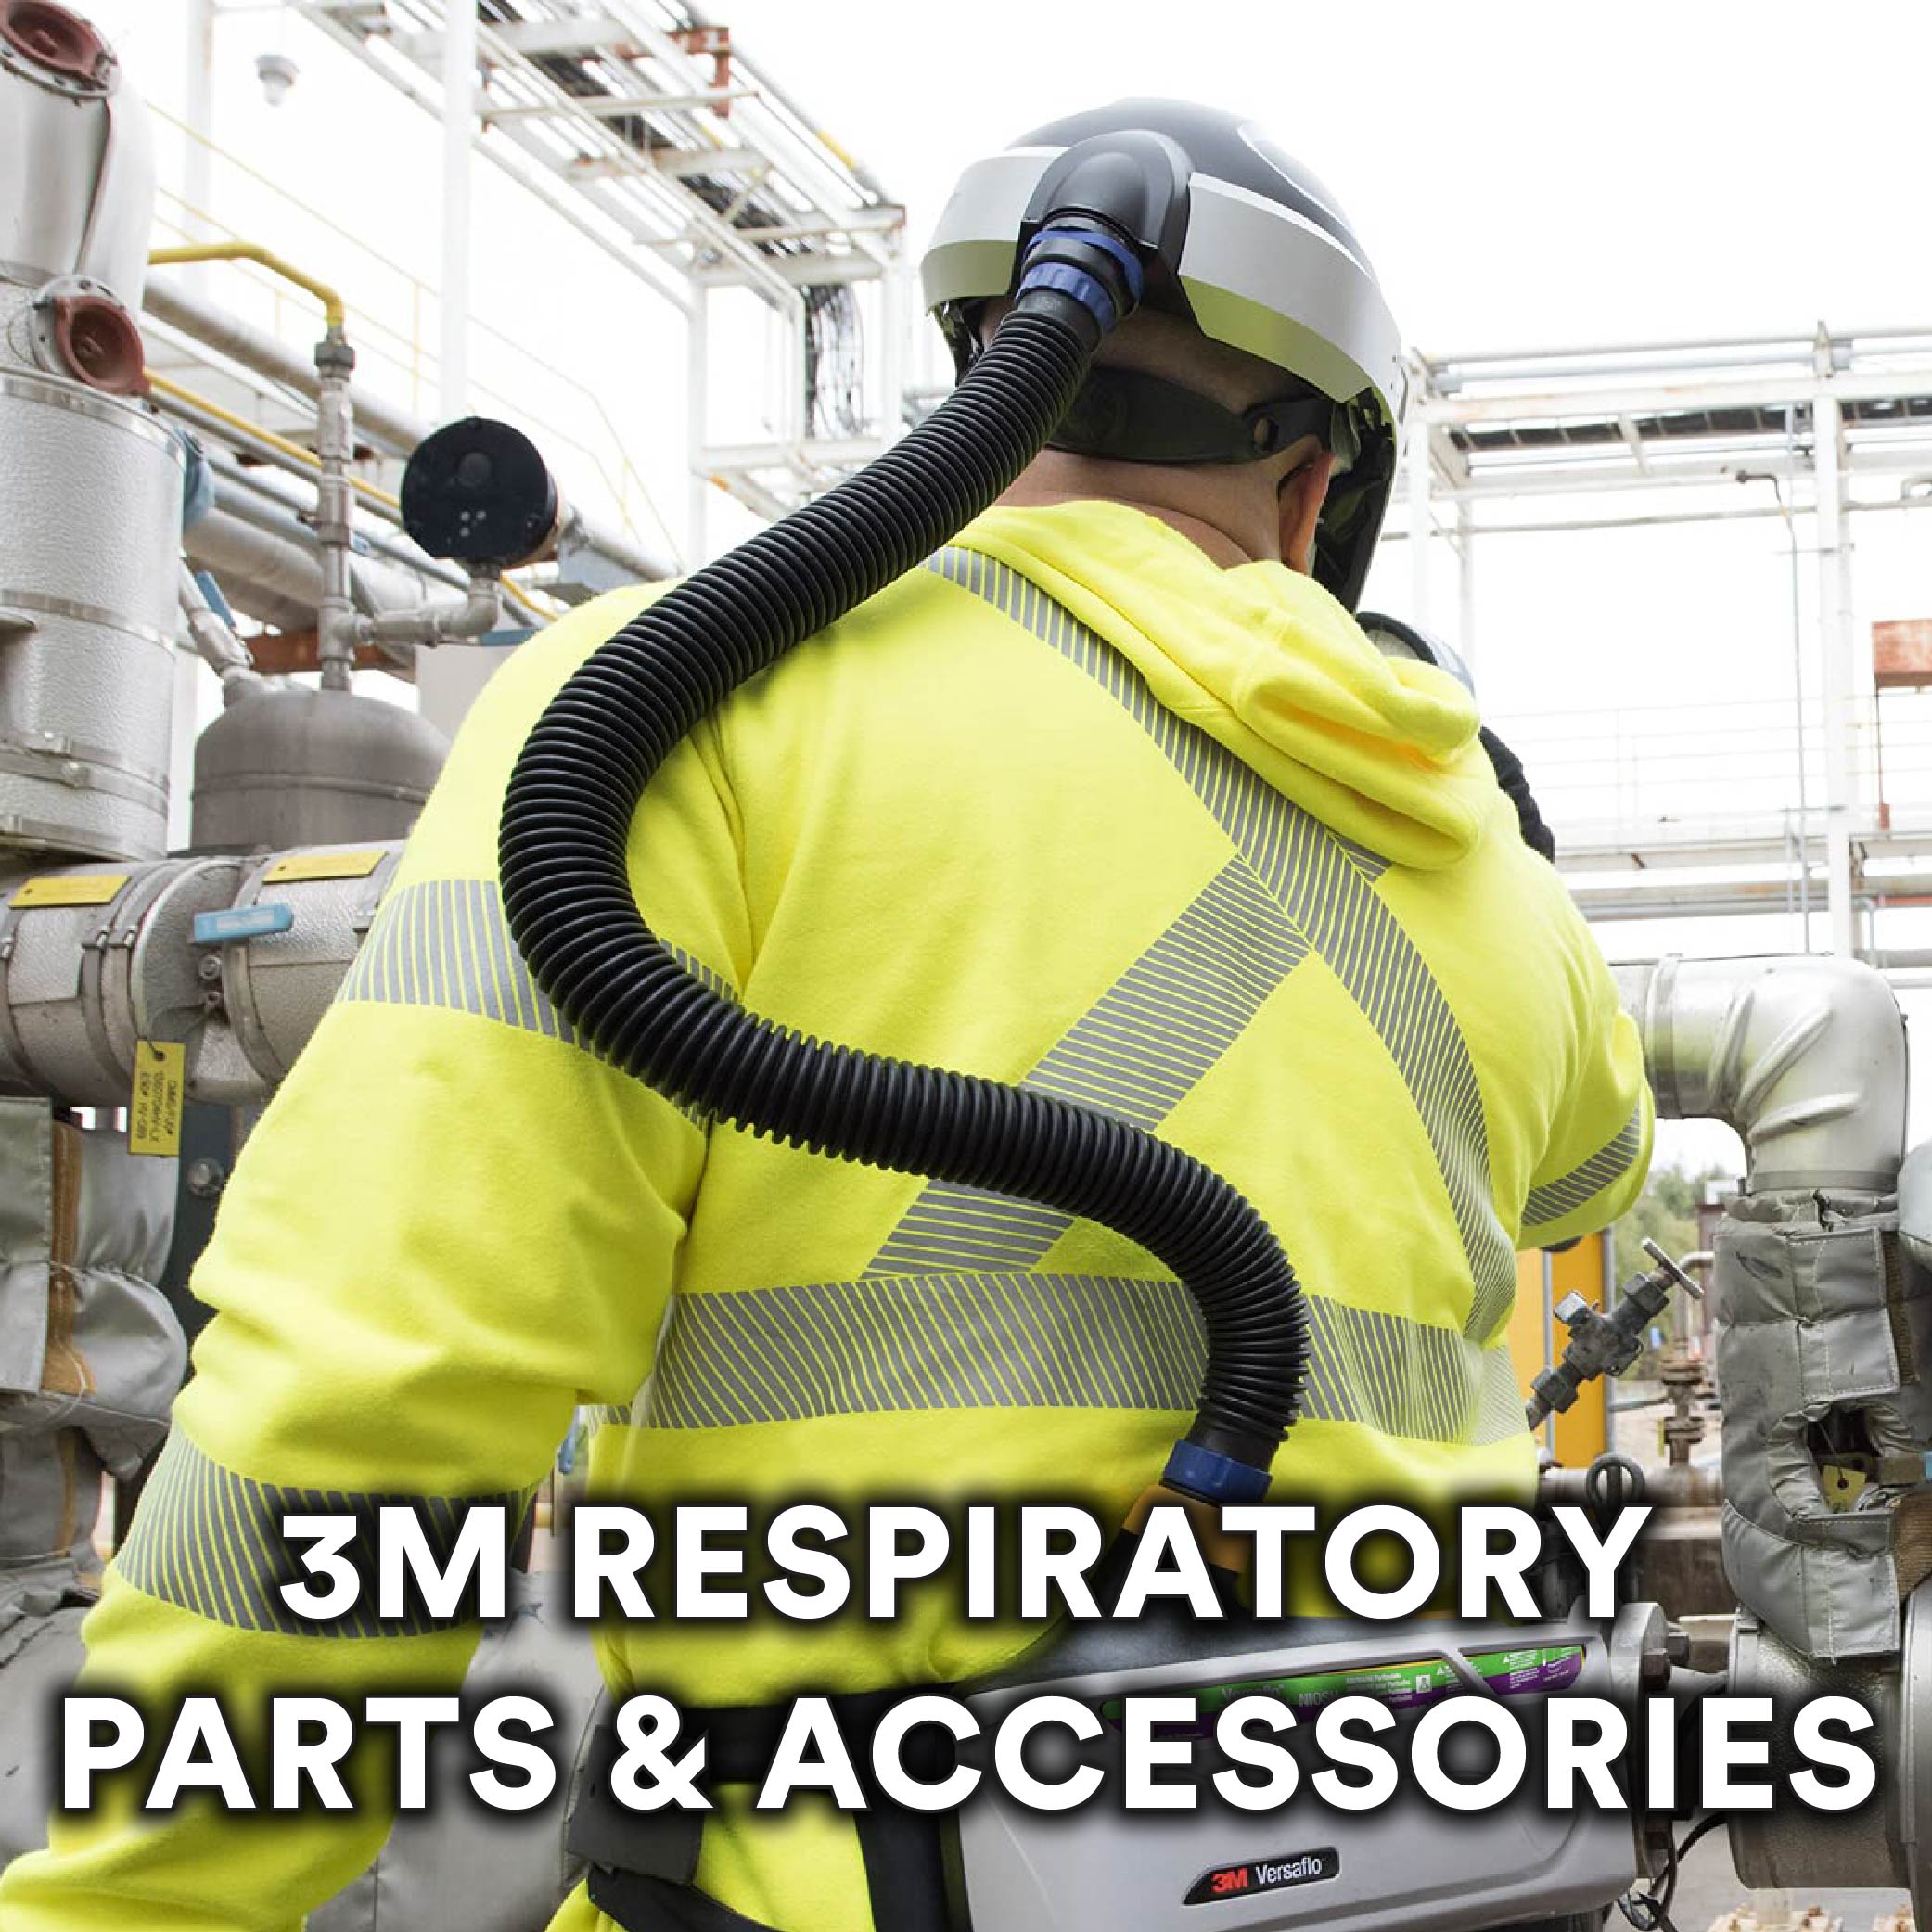 3M Respiratory Parts & Accessories